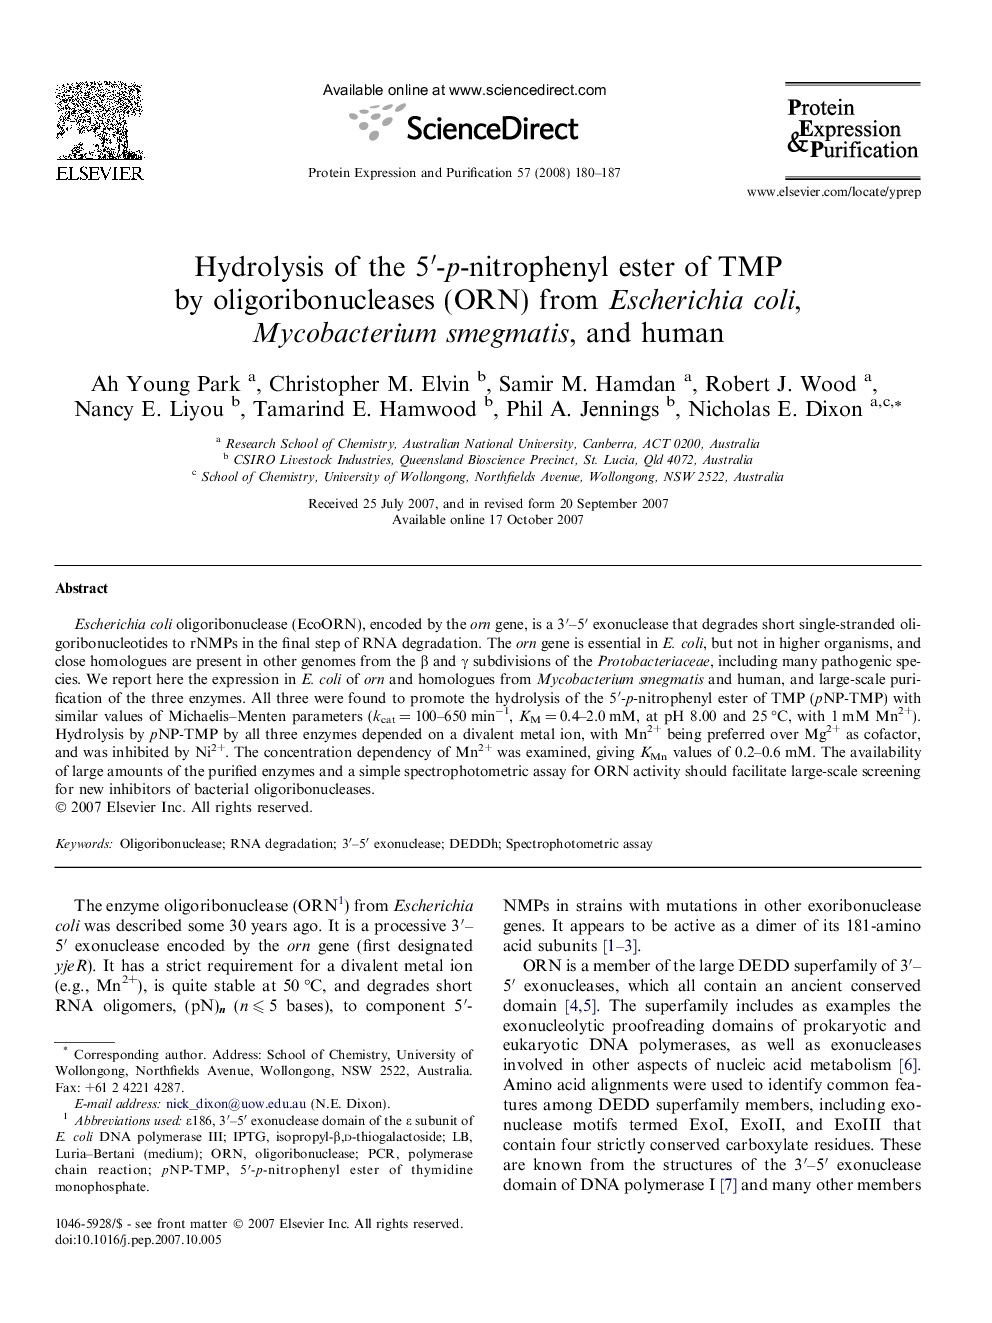 Hydrolysis of the 5â²-p-nitrophenyl ester of TMP by oligoribonucleases (ORN) from Escherichia coli, Mycobacterium smegmatis, and human